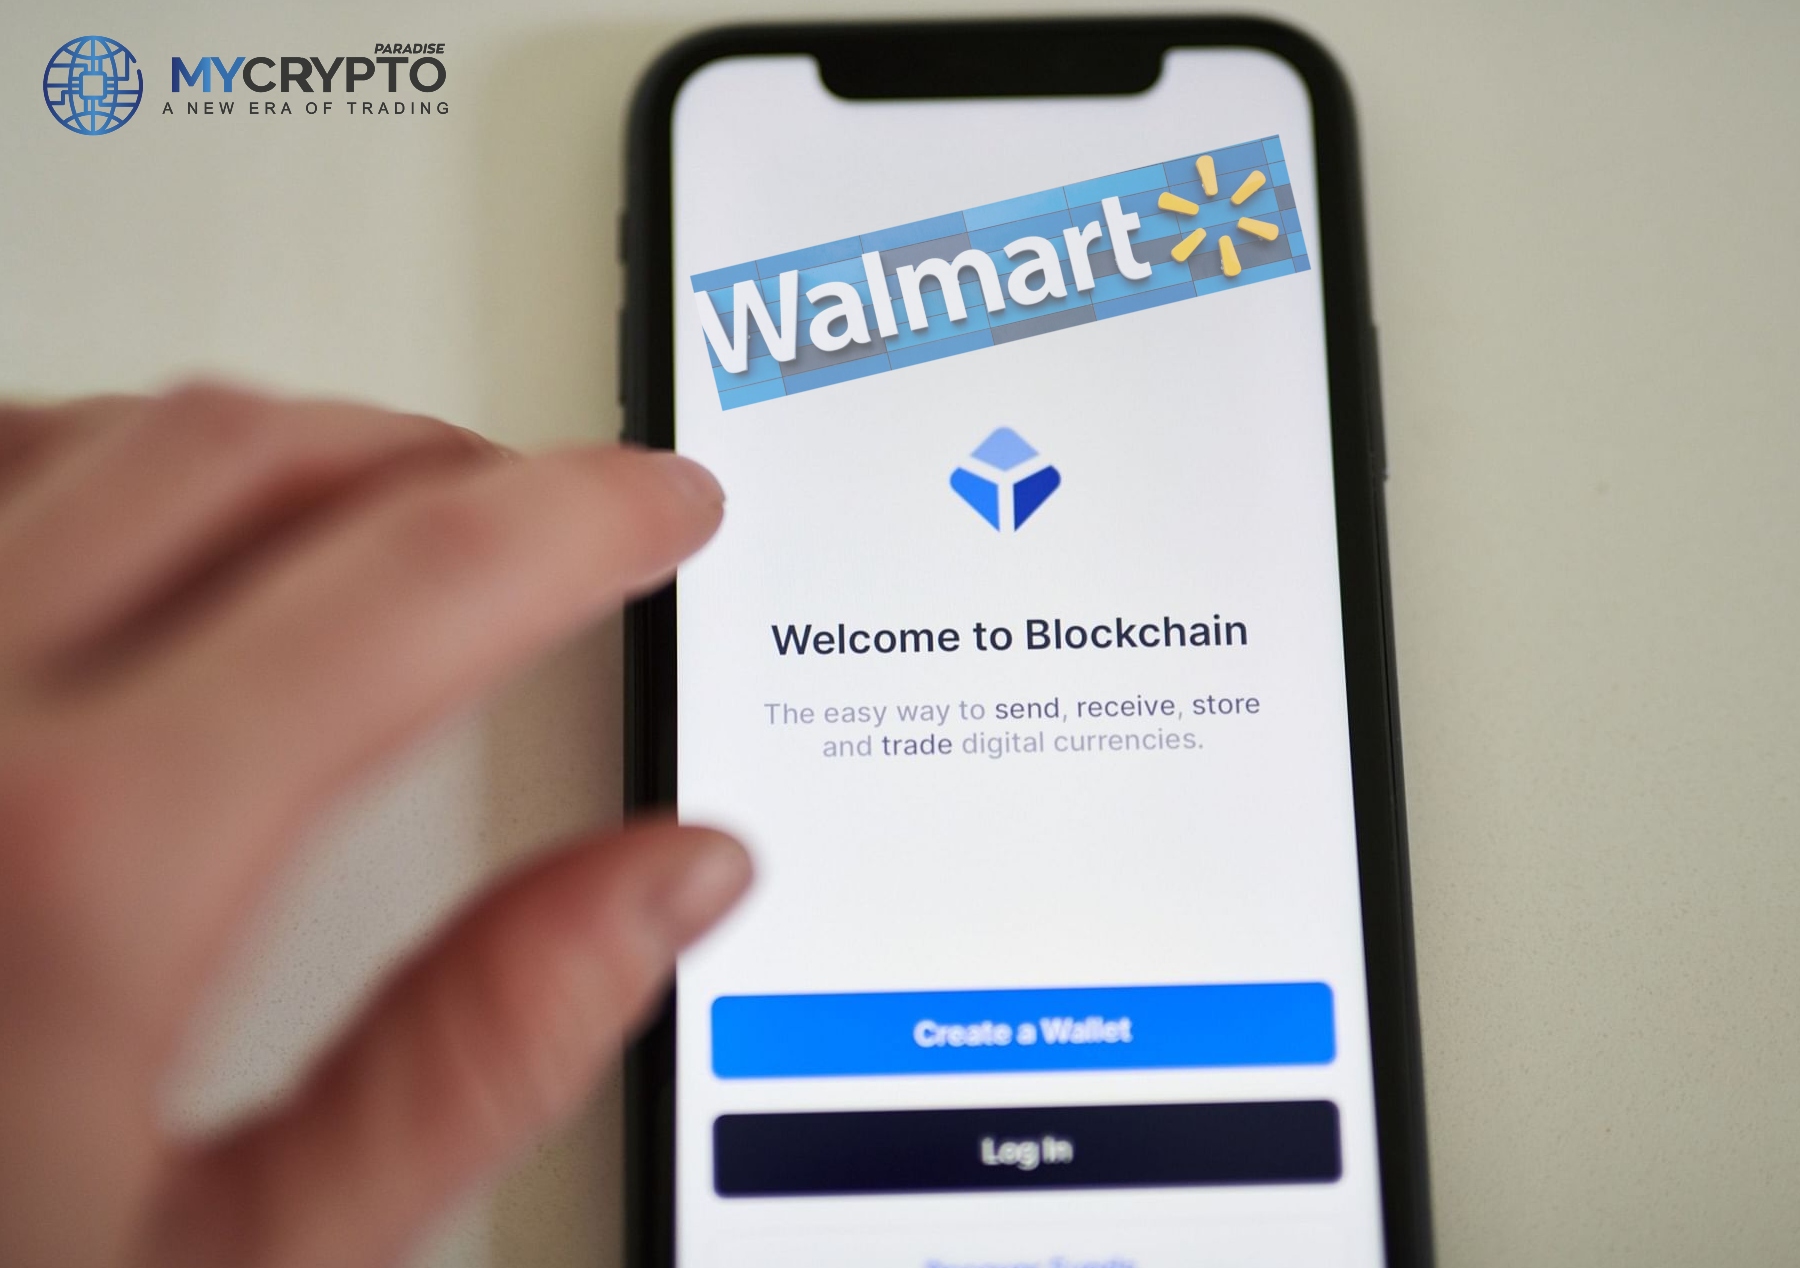 Walmart director joins board for crypto wallet company Blockchain.com